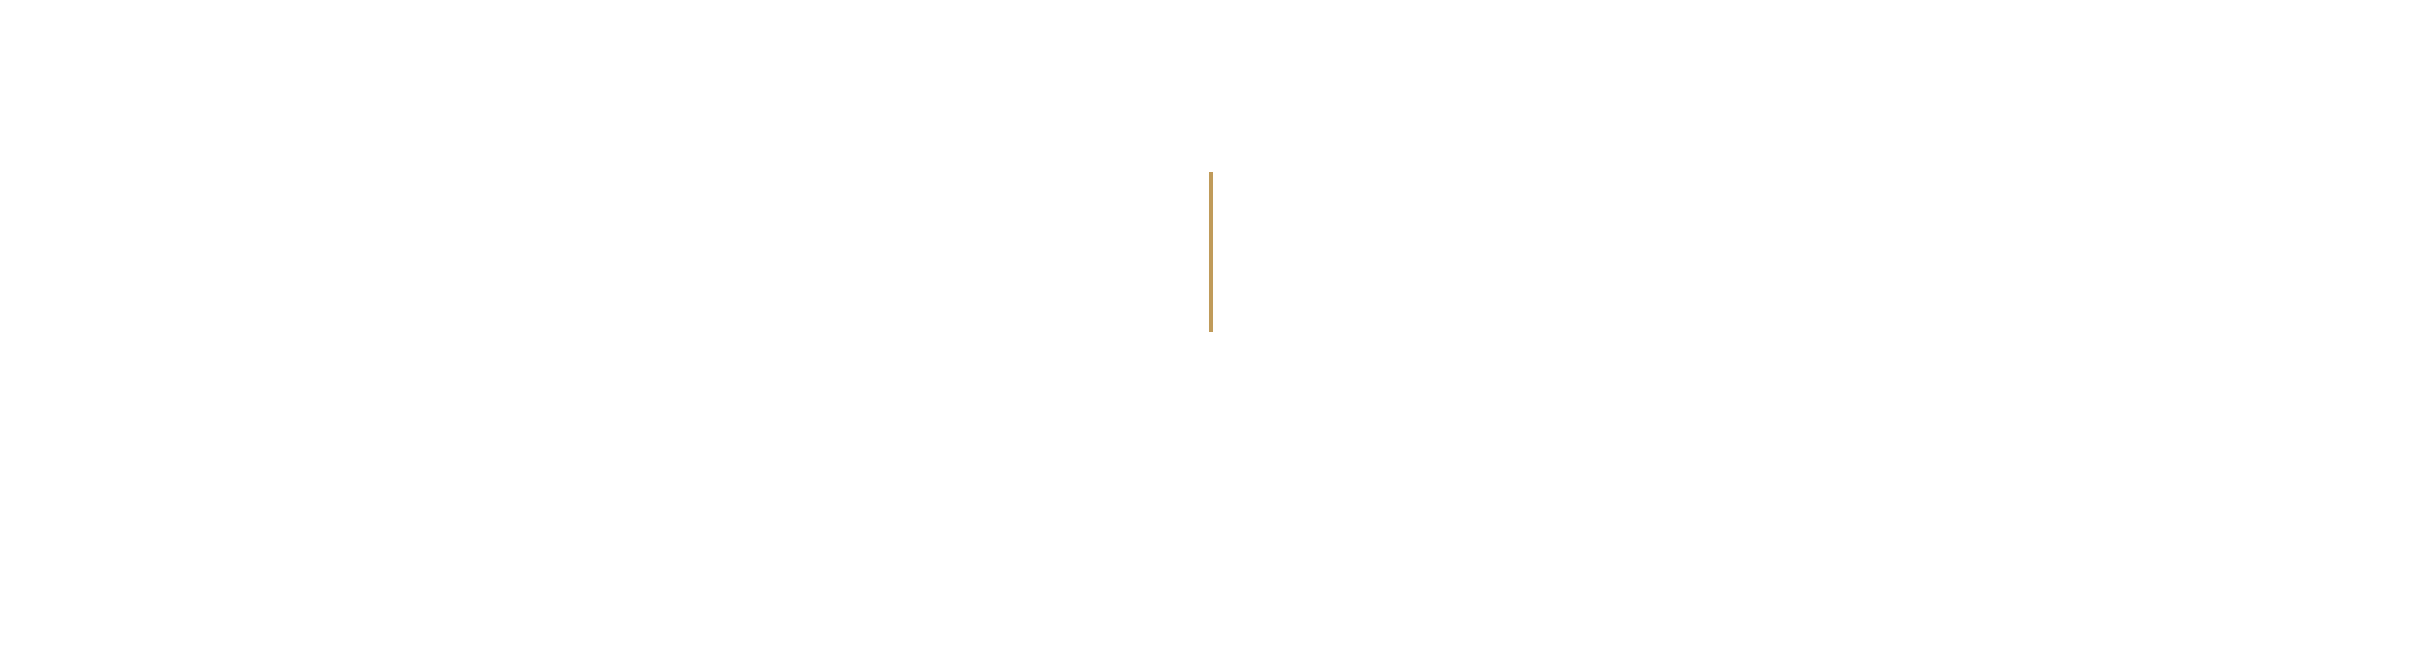 more than just a brandbook motif